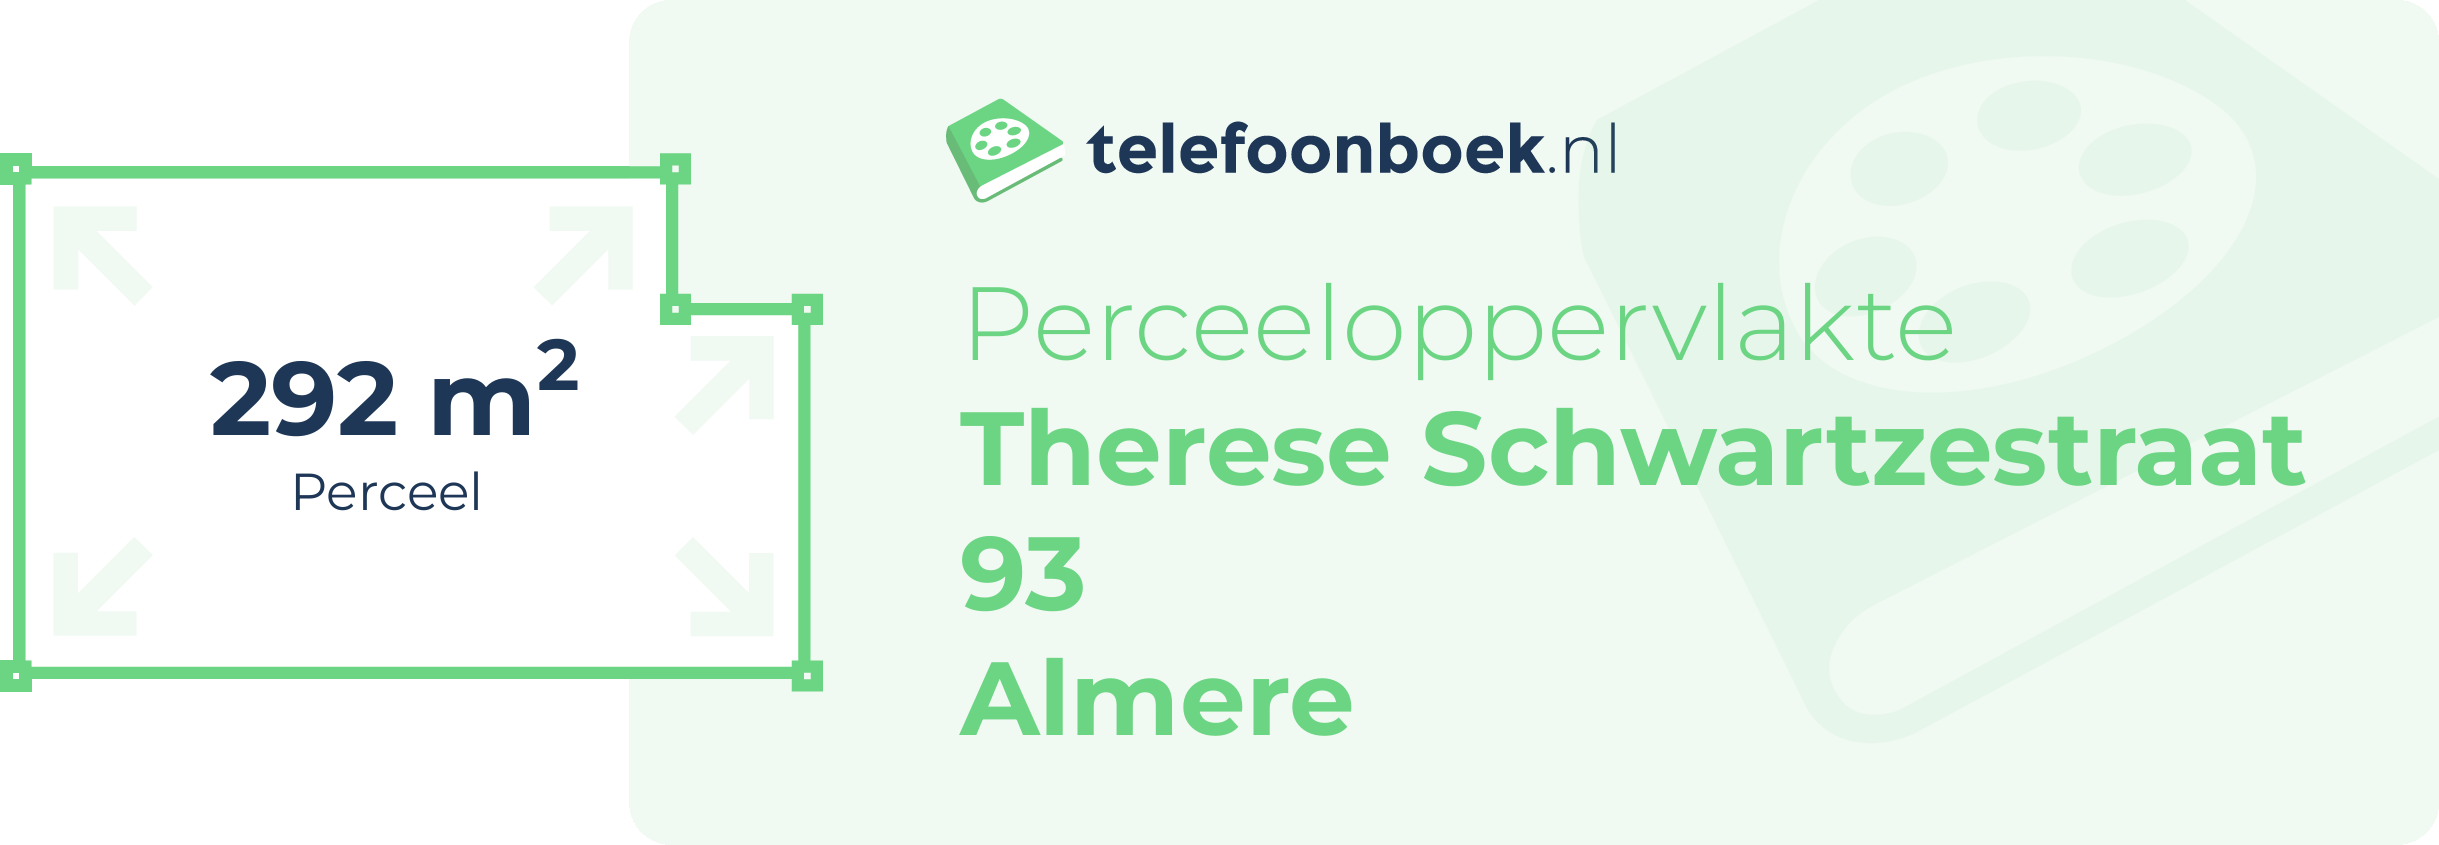 Perceeloppervlakte Therese Schwartzestraat 93 Almere